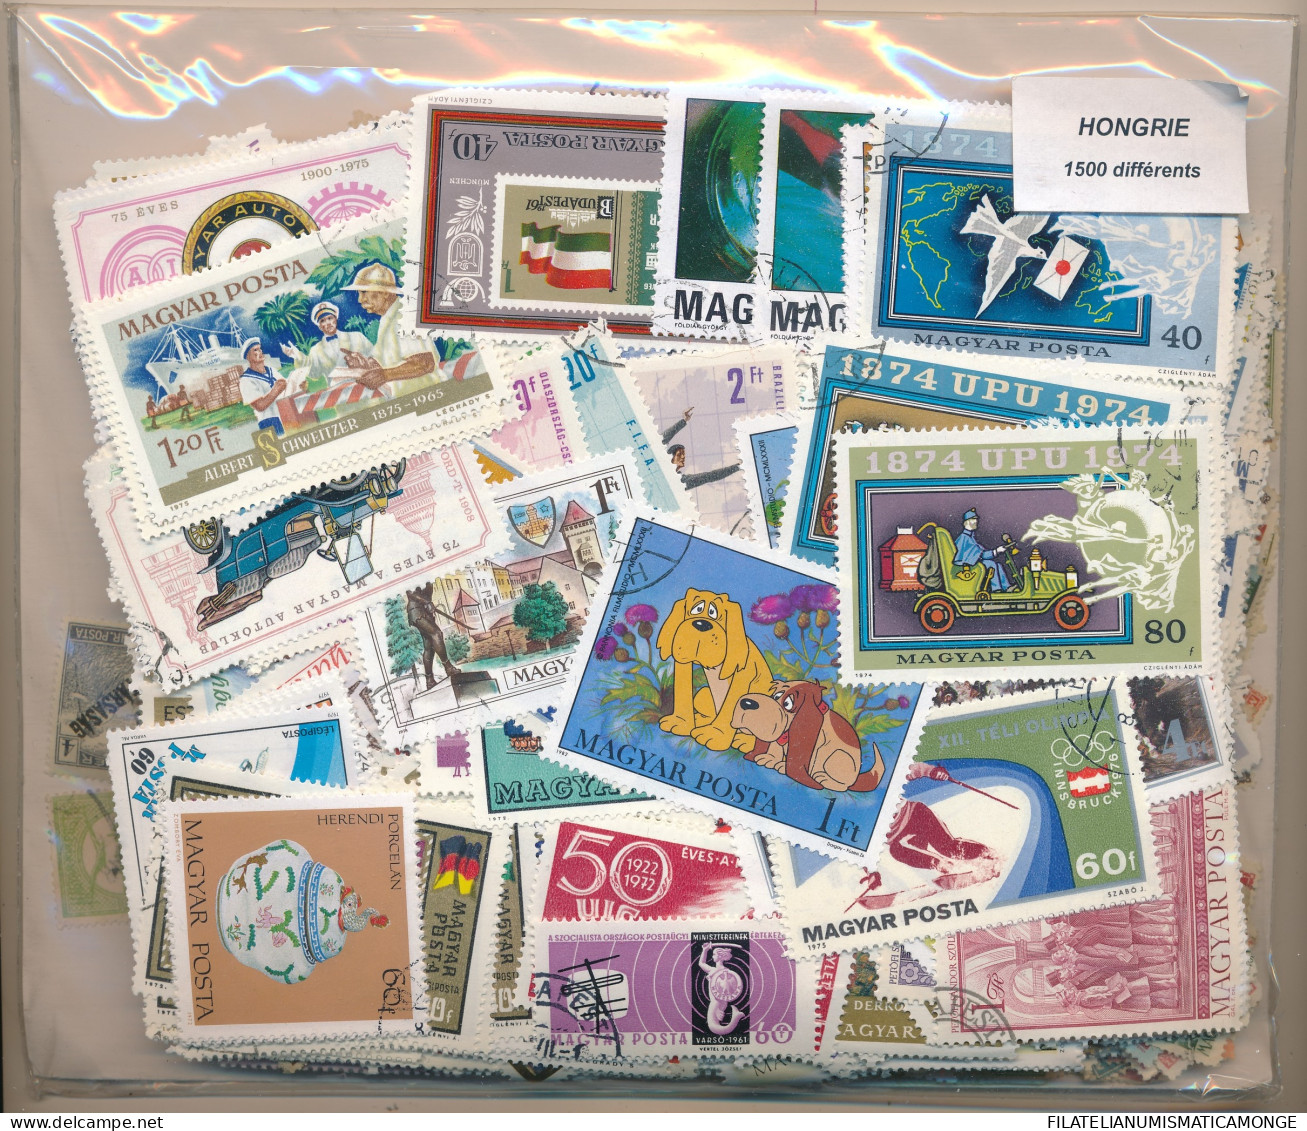  Offer - Lot Stamps - Paqueteria  Hungría 1500 Sellos Diferentes            - Alla Rinfusa (min 1000 Francobolli)